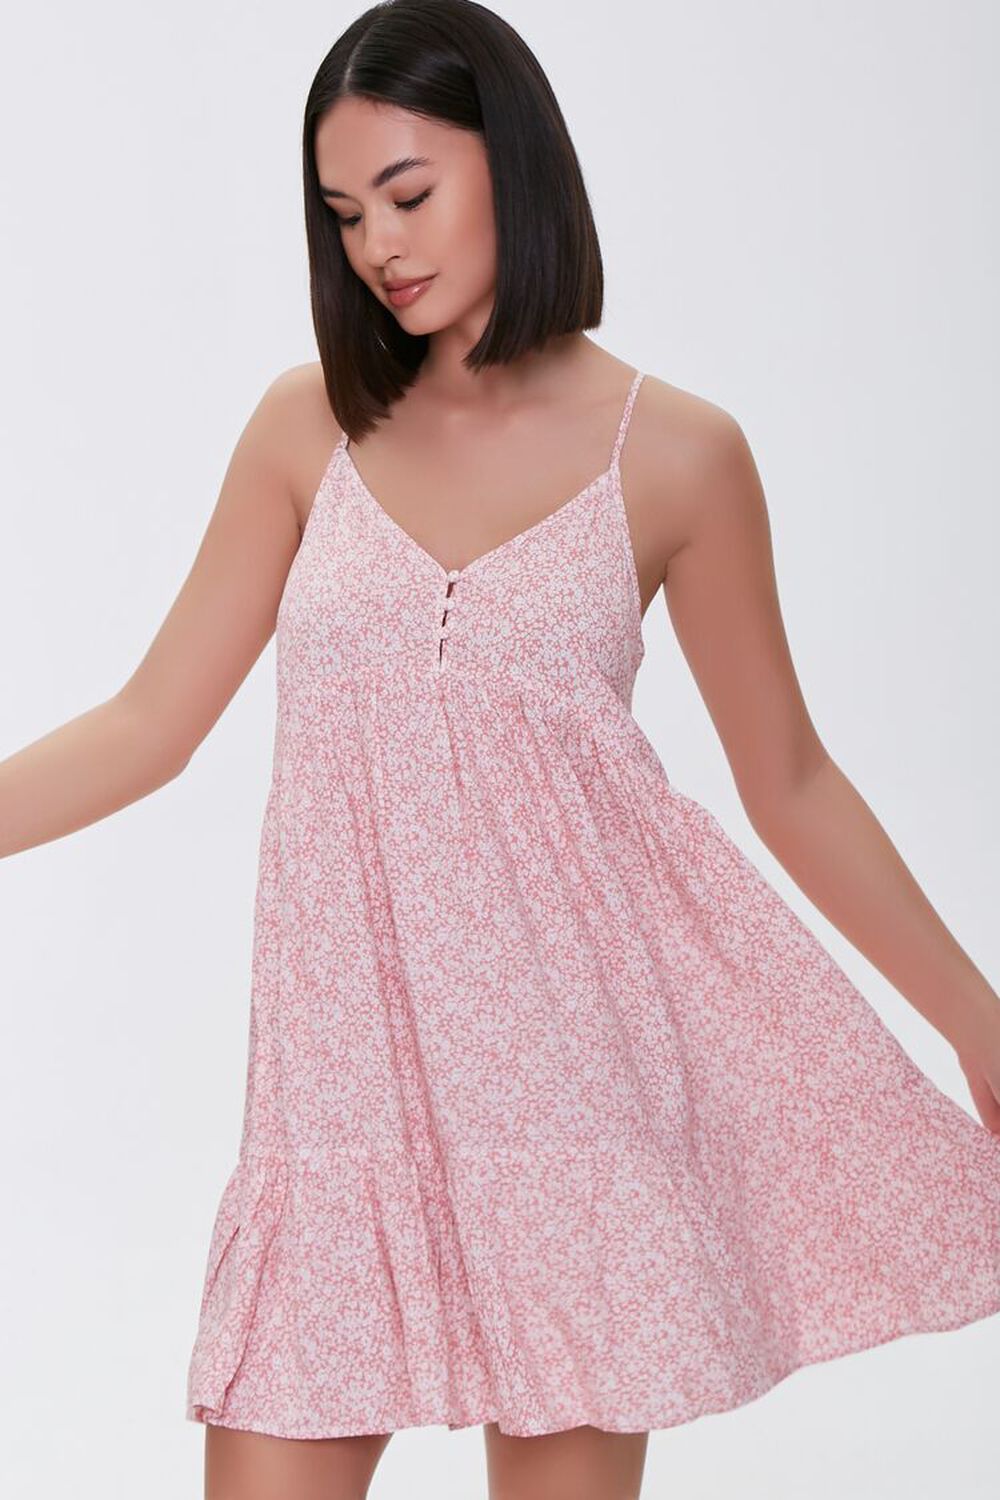 ROSE/CREAM Ditsy Floral Print Mini Dress, image 1